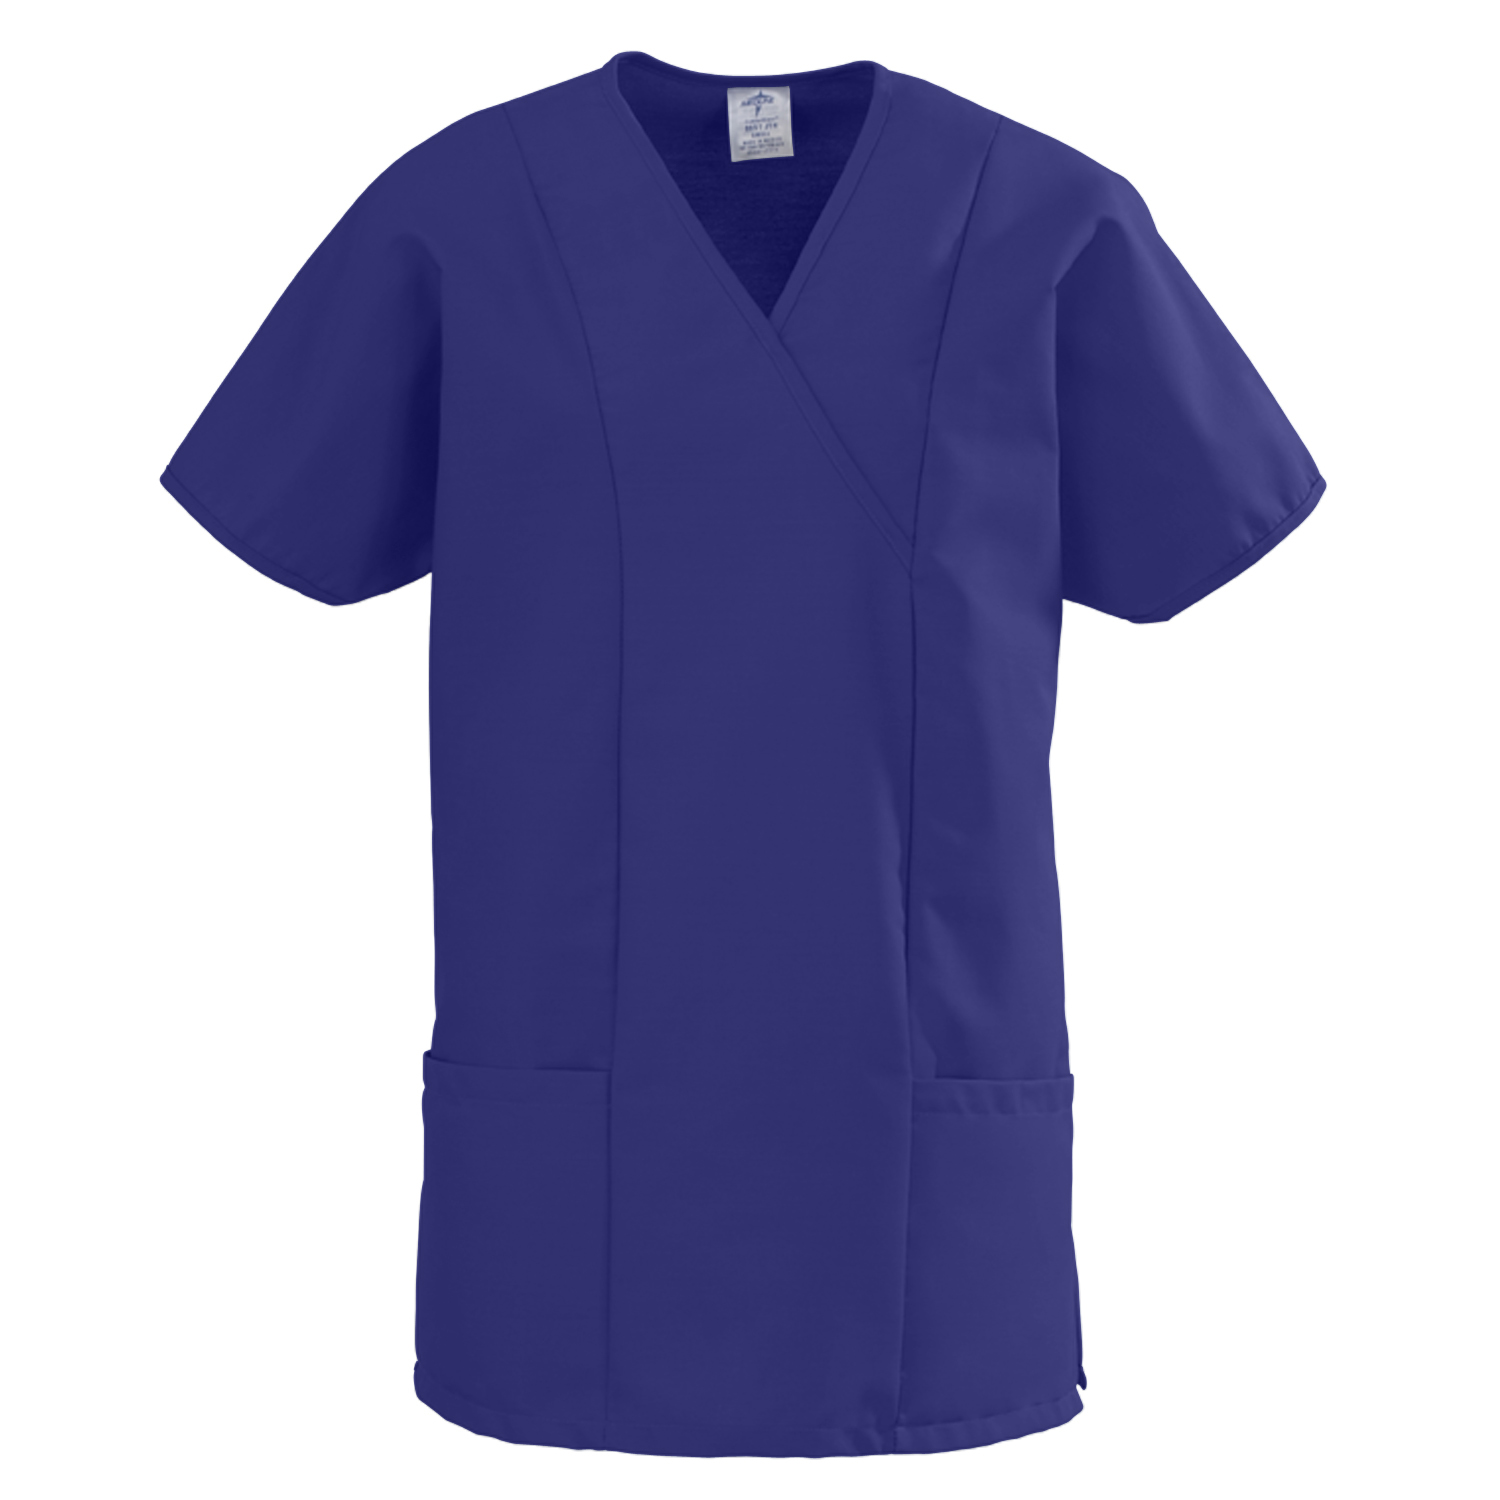 Box of 30 Medline Nurse Blue Disposable Scrubs V-Neck Shirts NON27202M MEDIUM